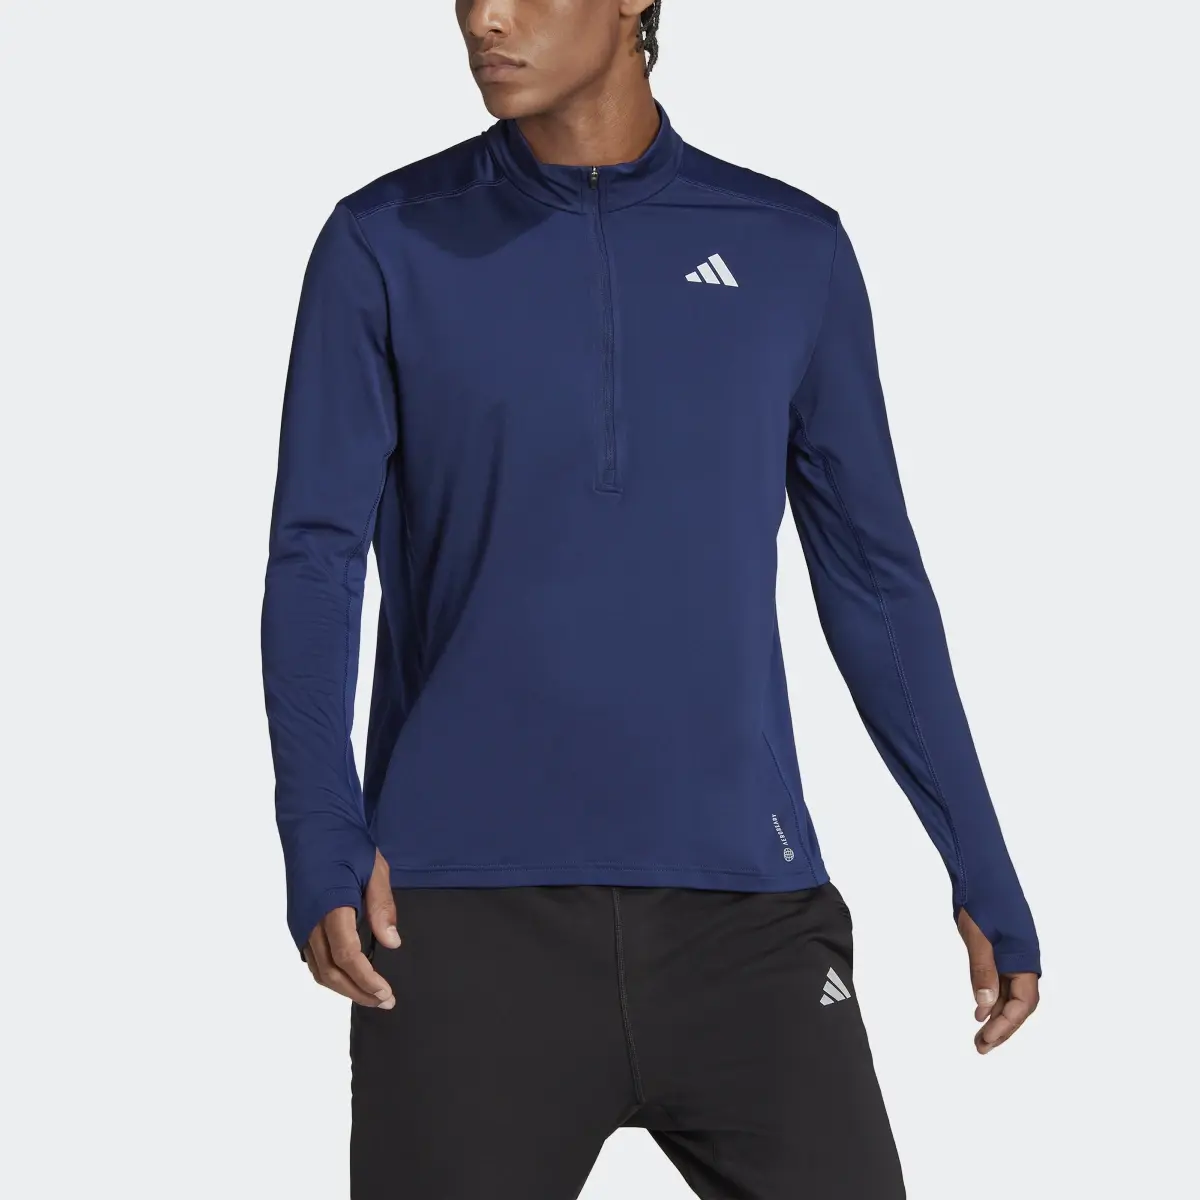 Adidas Own the Run 1/2 Zip Long-Sleeve Top. 1